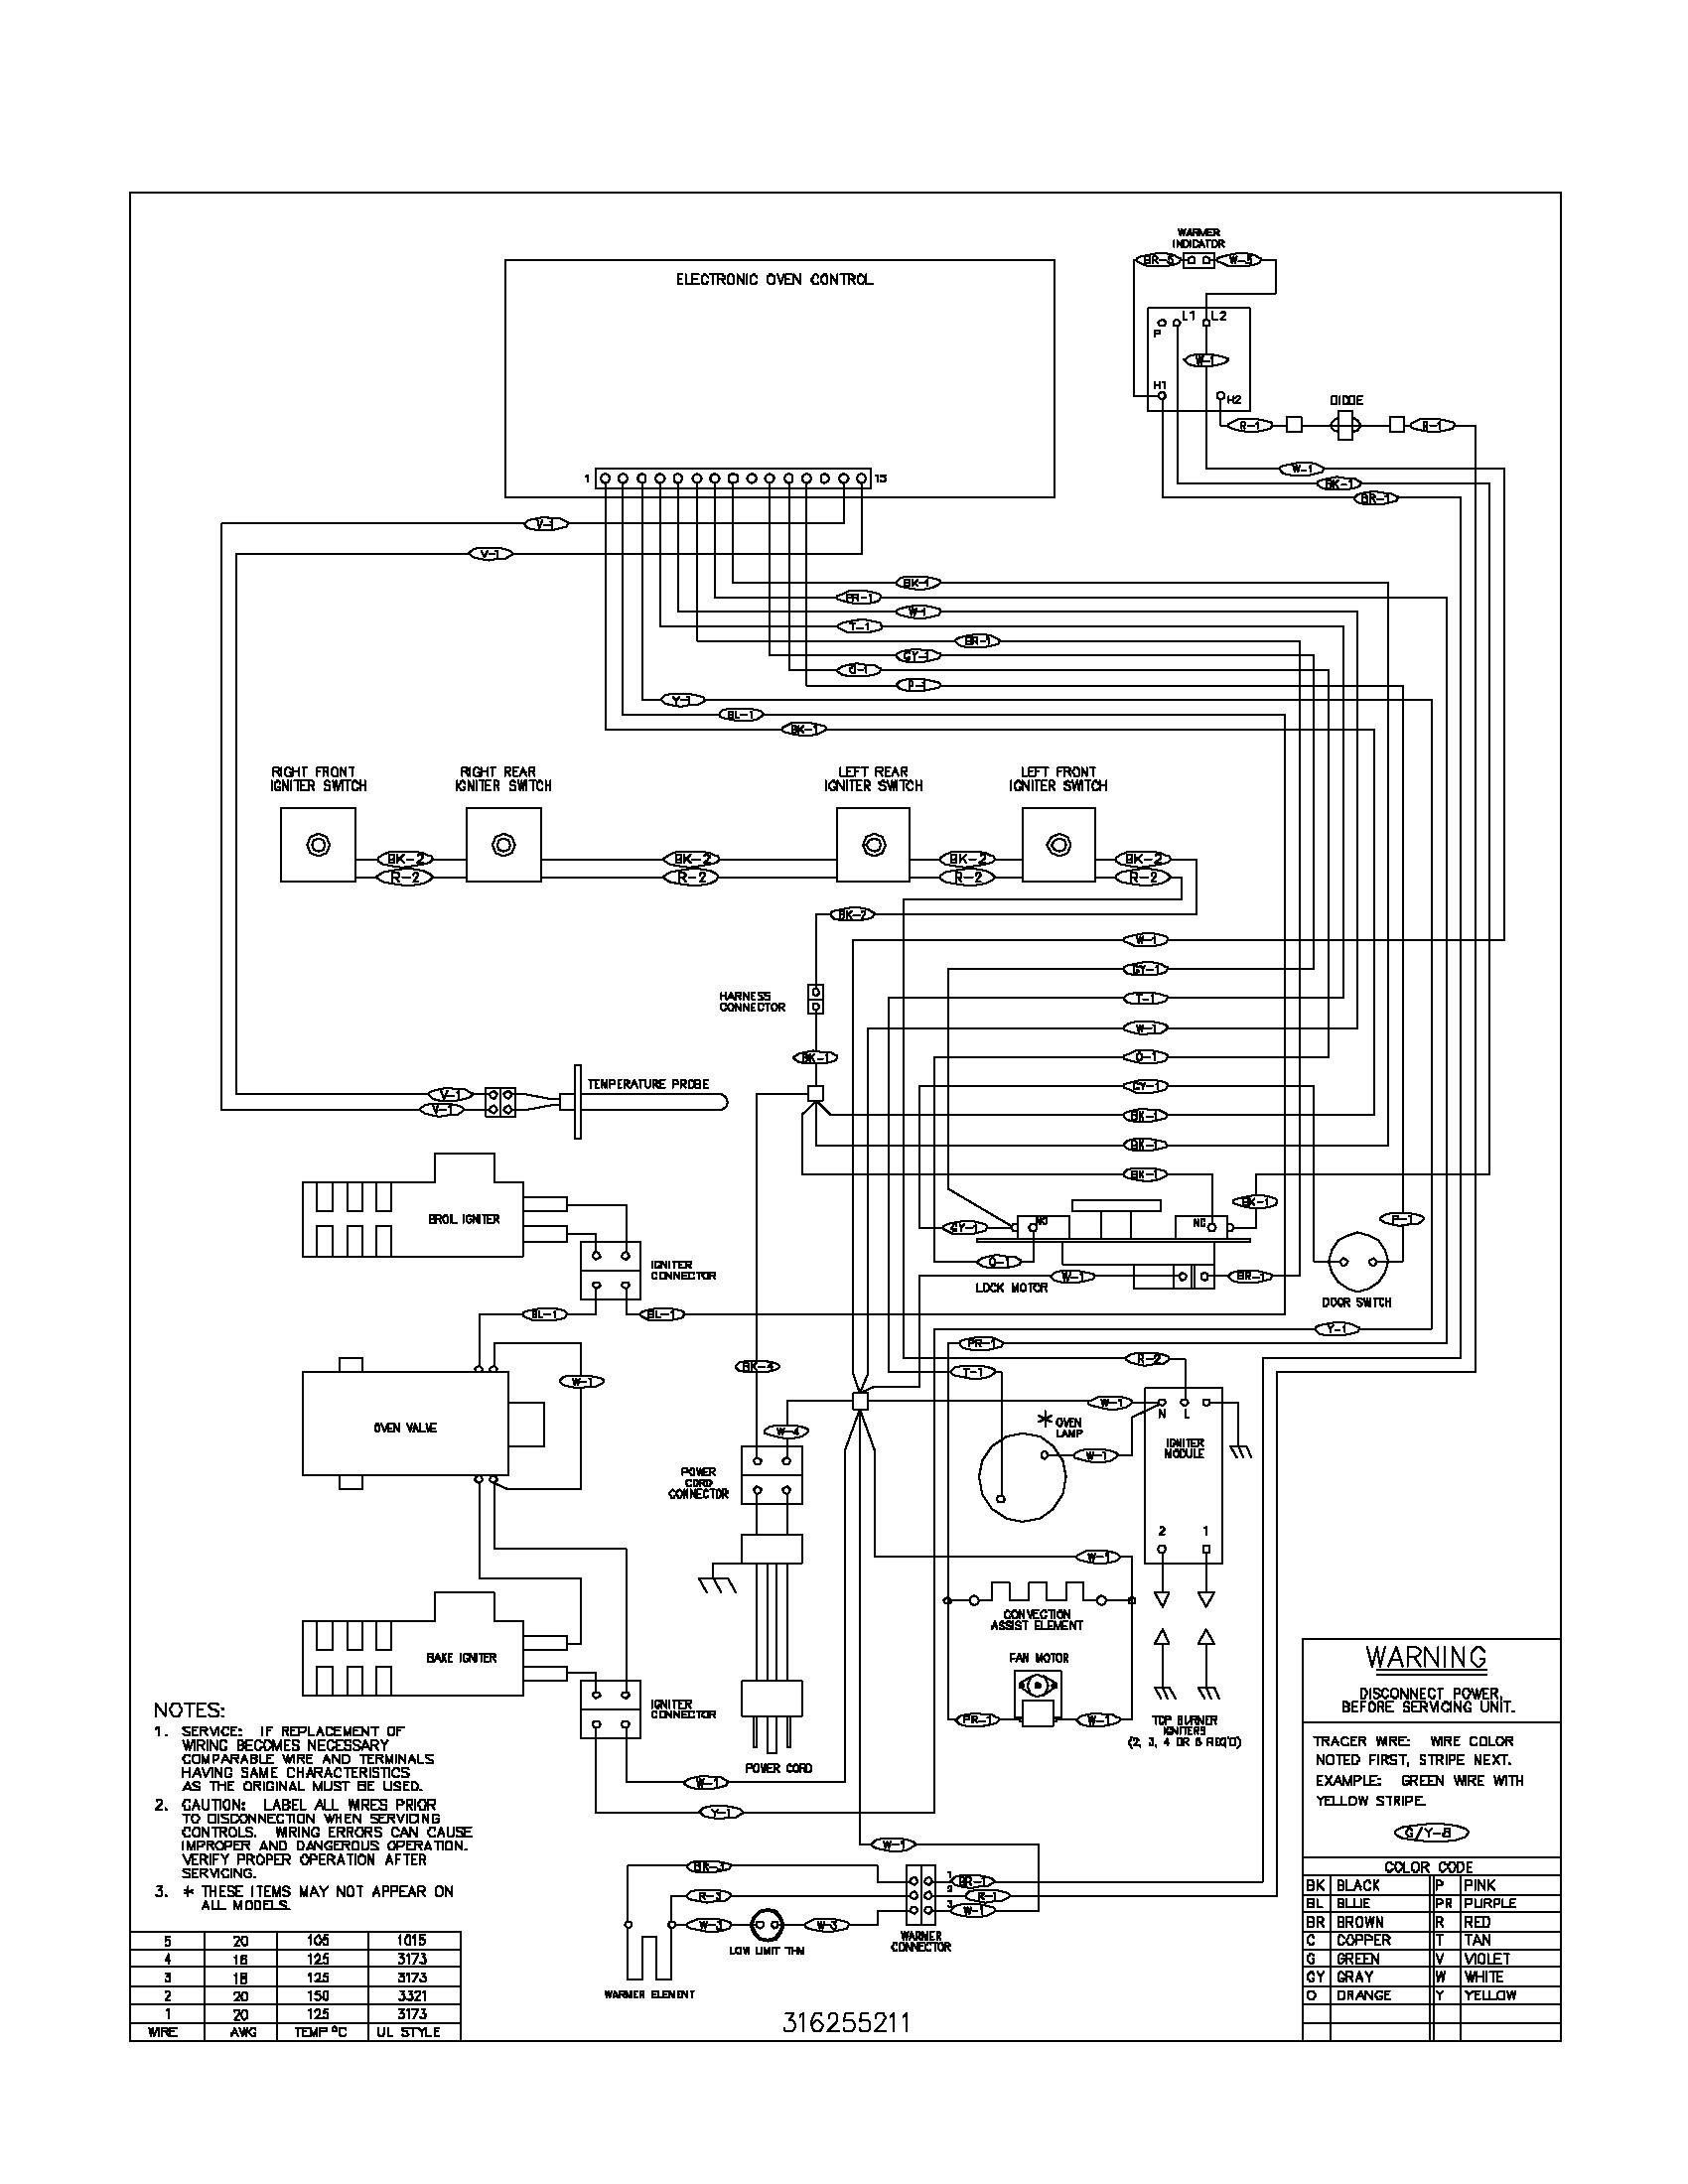 Ge Refrigerator Wiring Diagram Ice Maker Fresh Wiring Diagram For